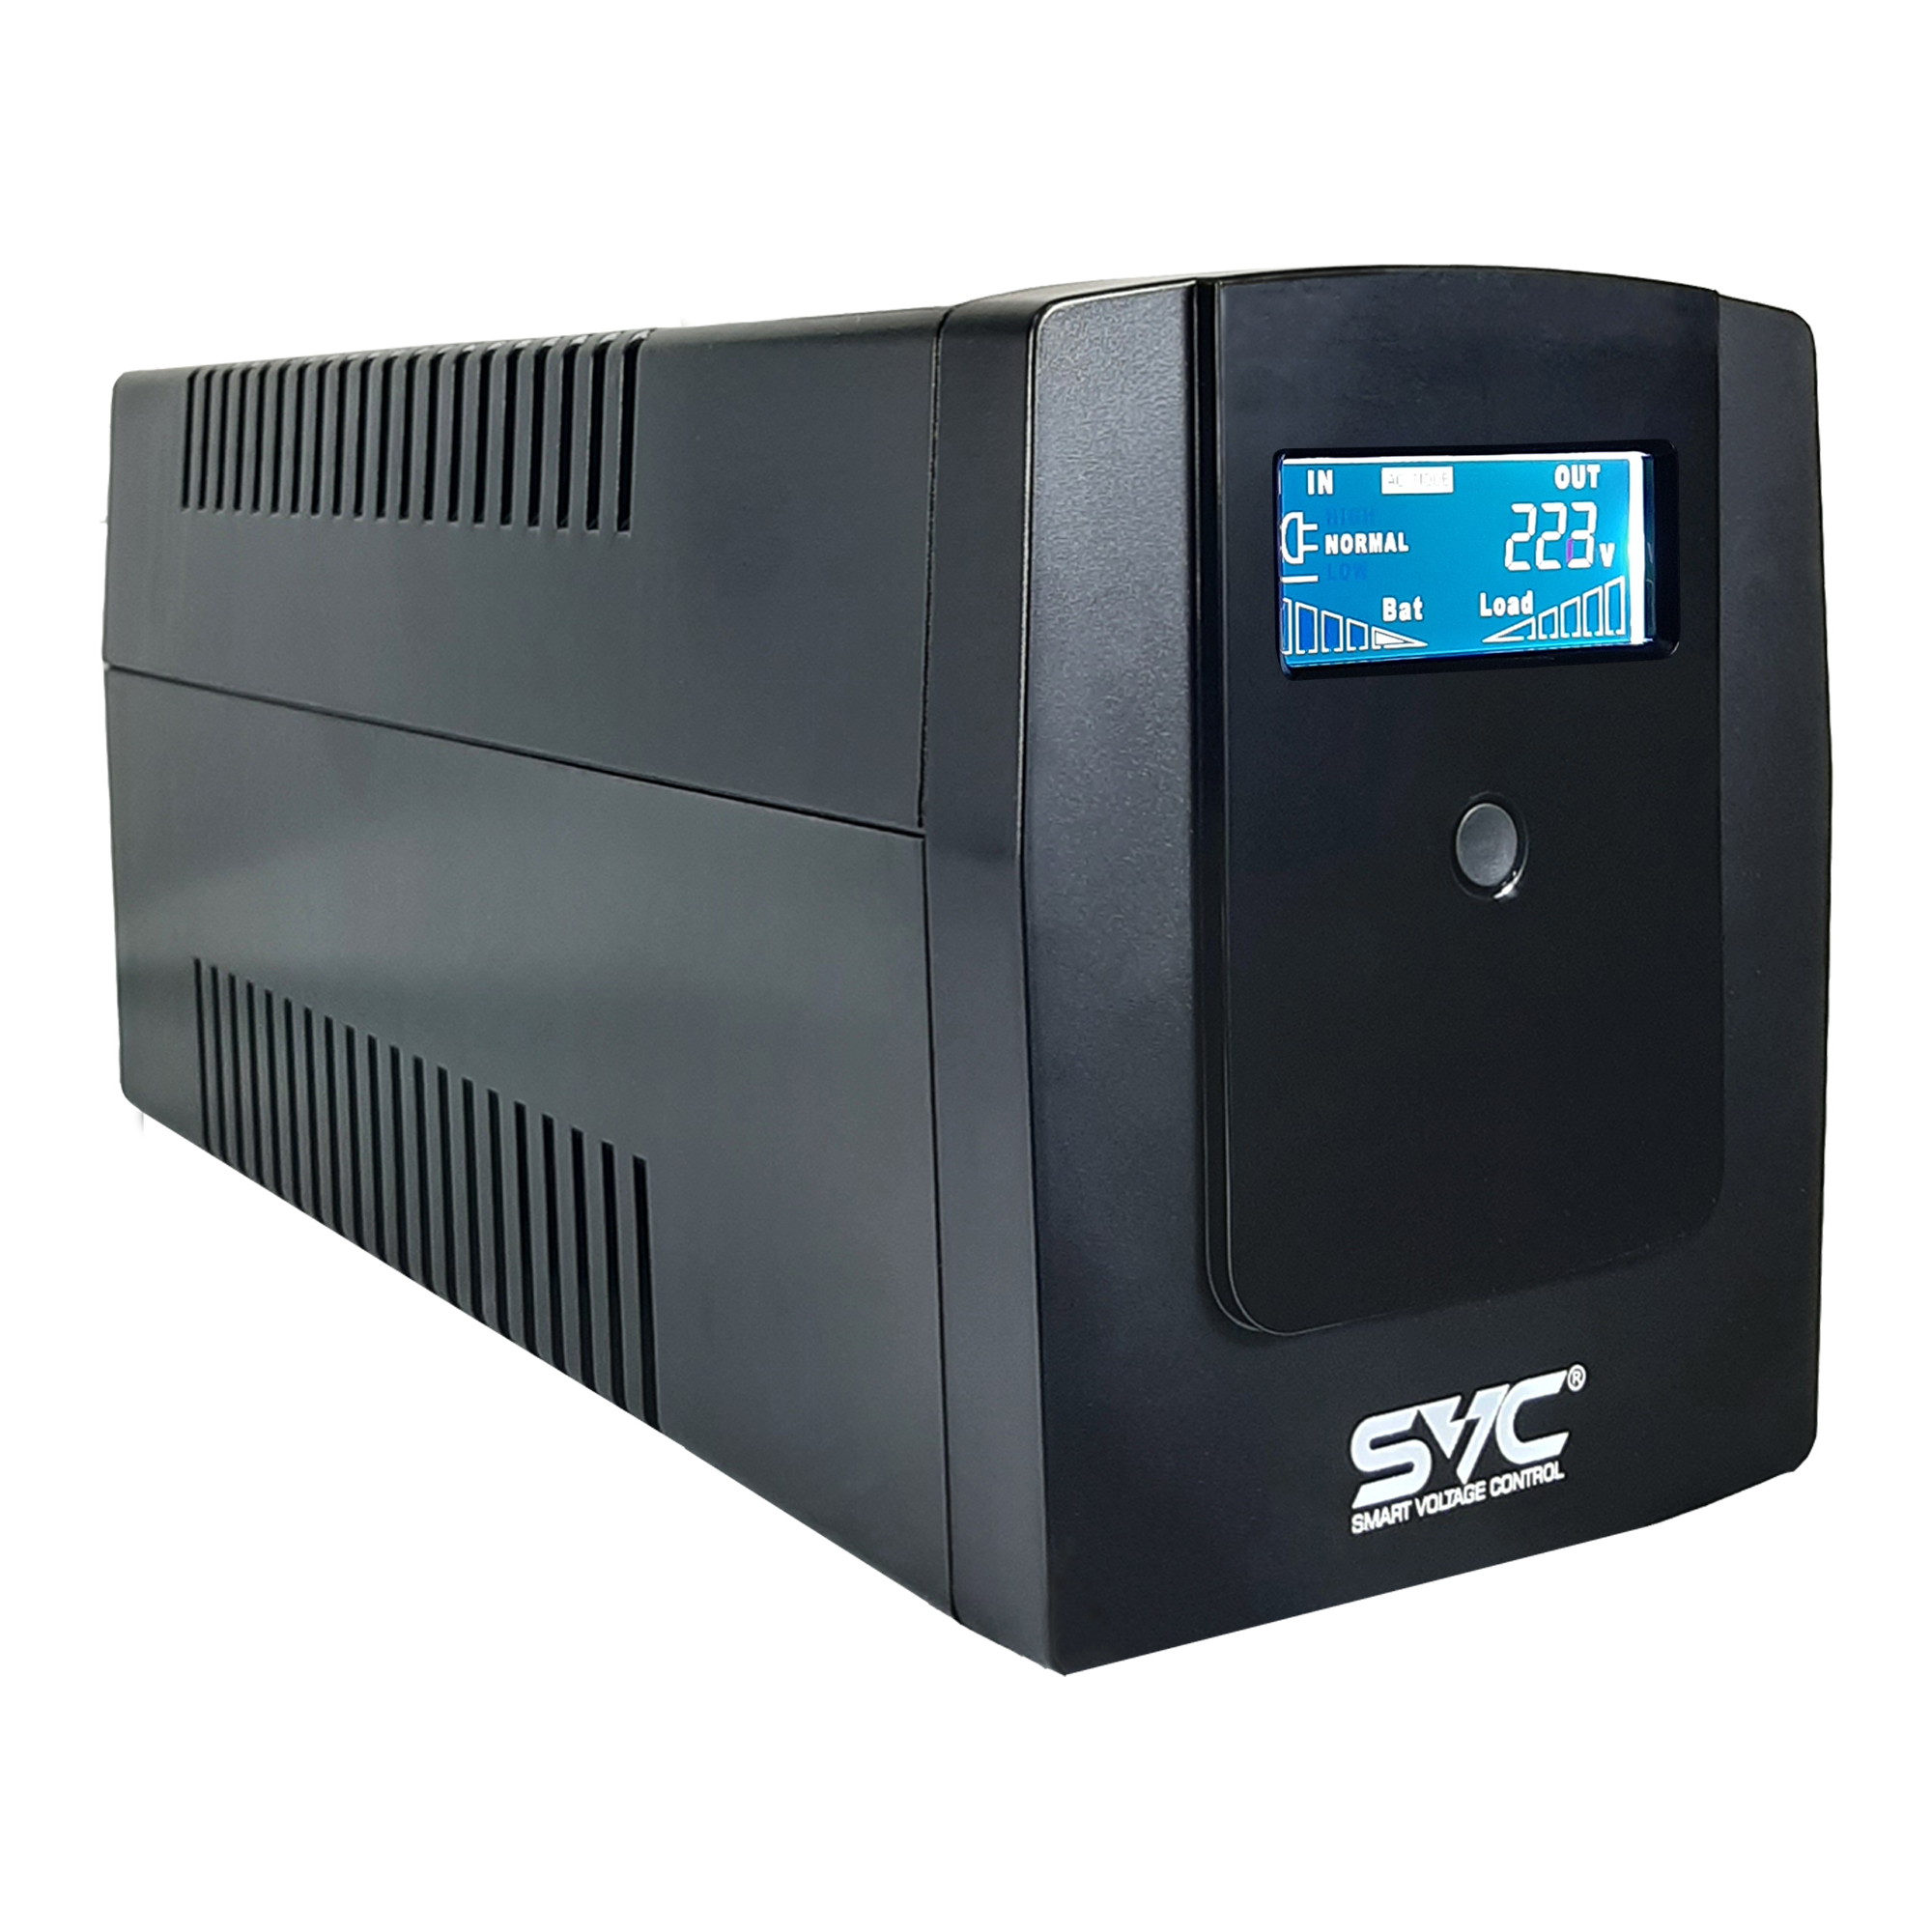 ИБП SVC V-1500-R-LCD, 1500VA, 900W, EURO, розеток - 3, USB, черный (V-1500-R-LCD)